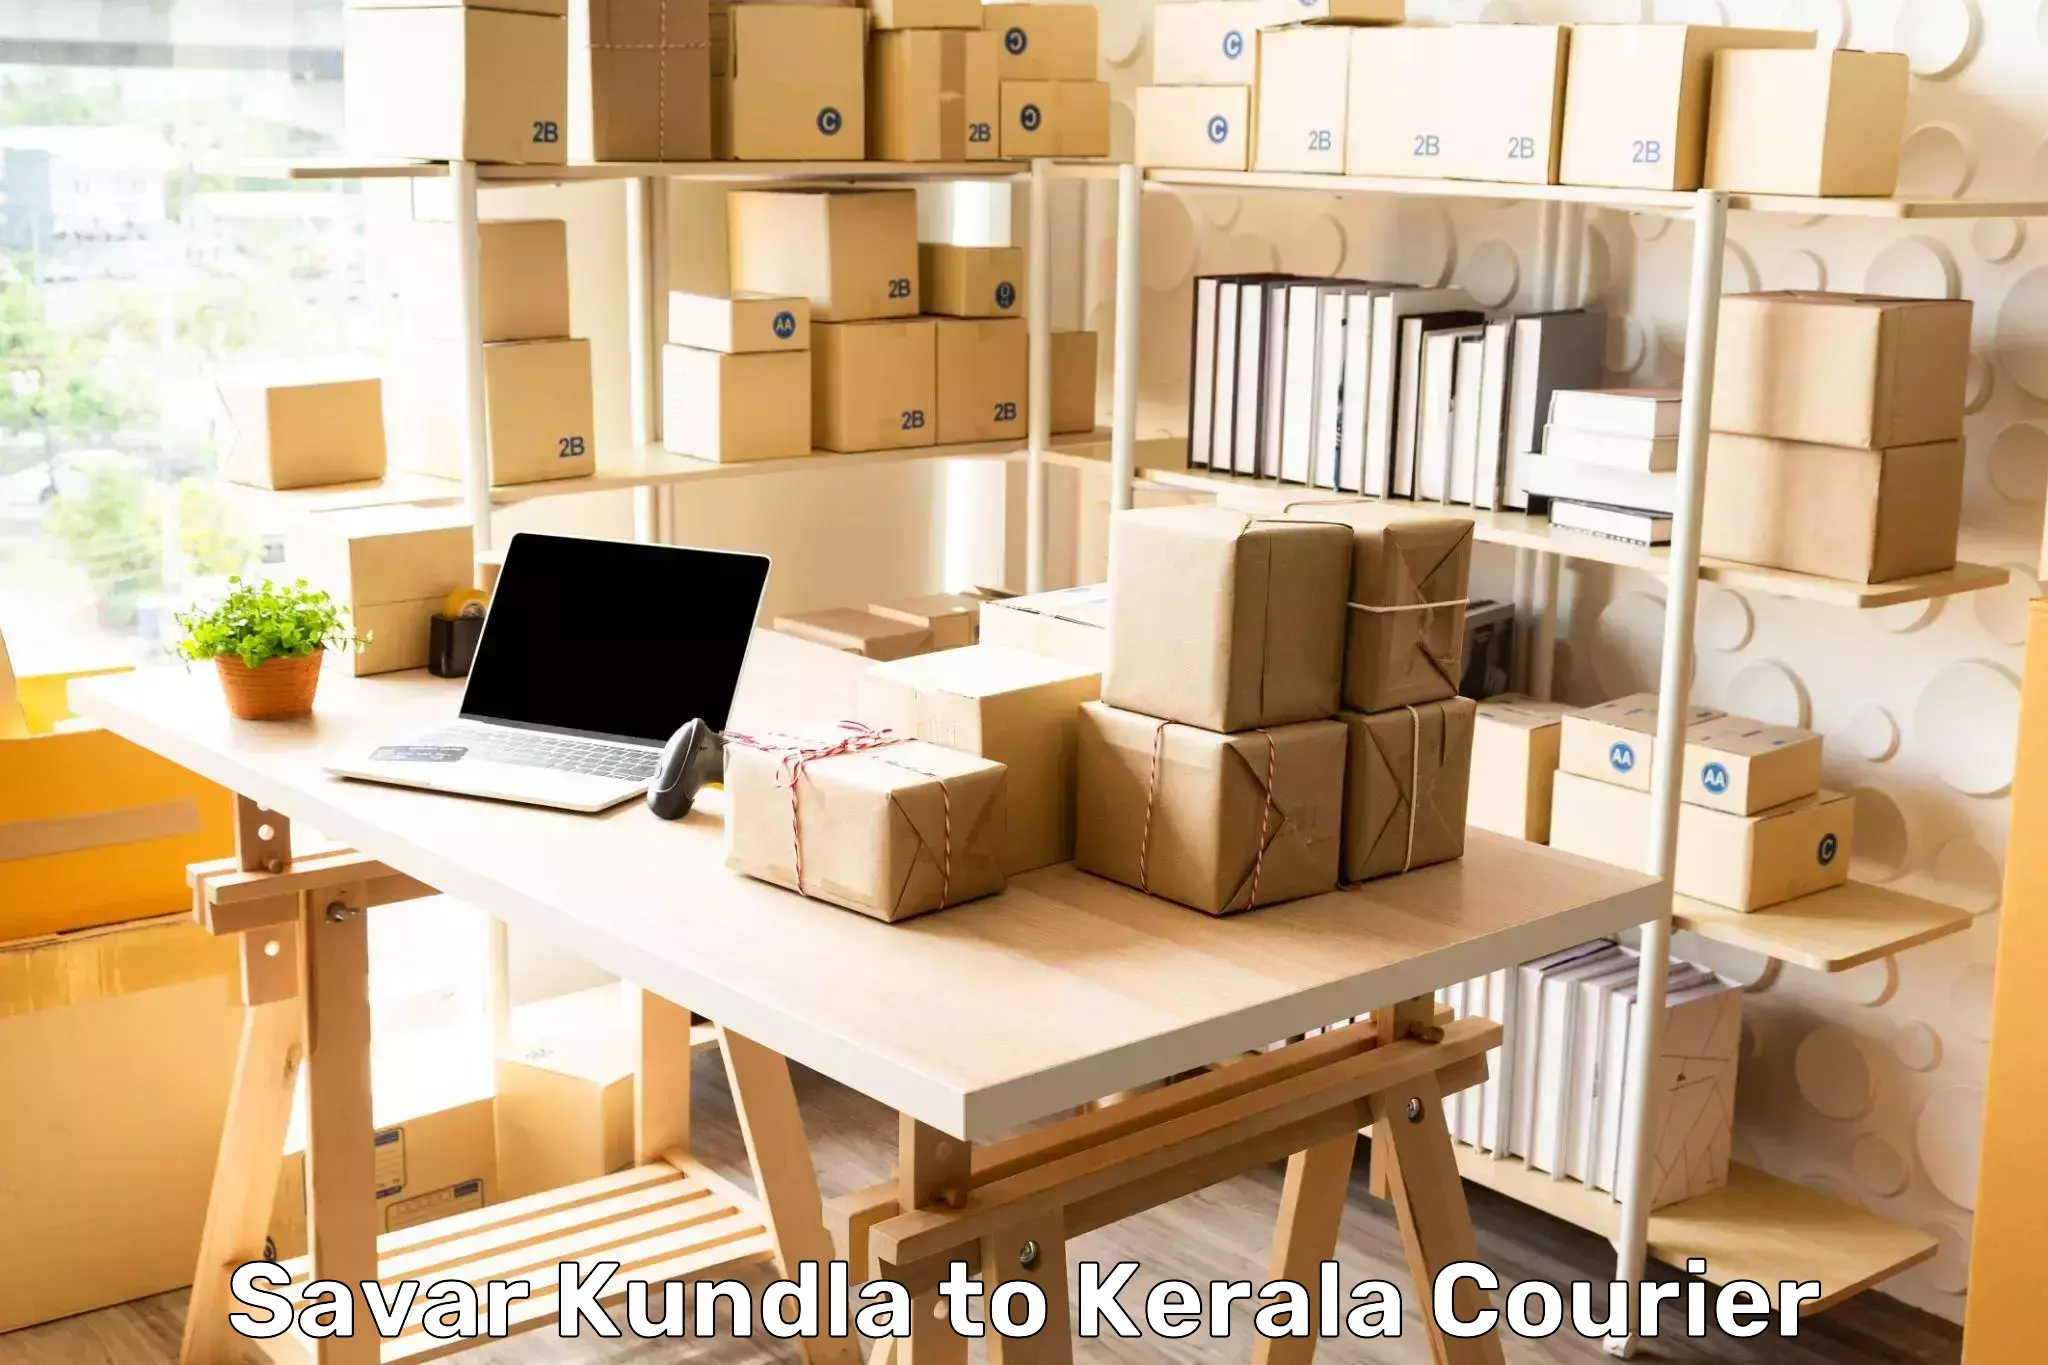 Full-service courier options Savar Kundla to Trivandrum